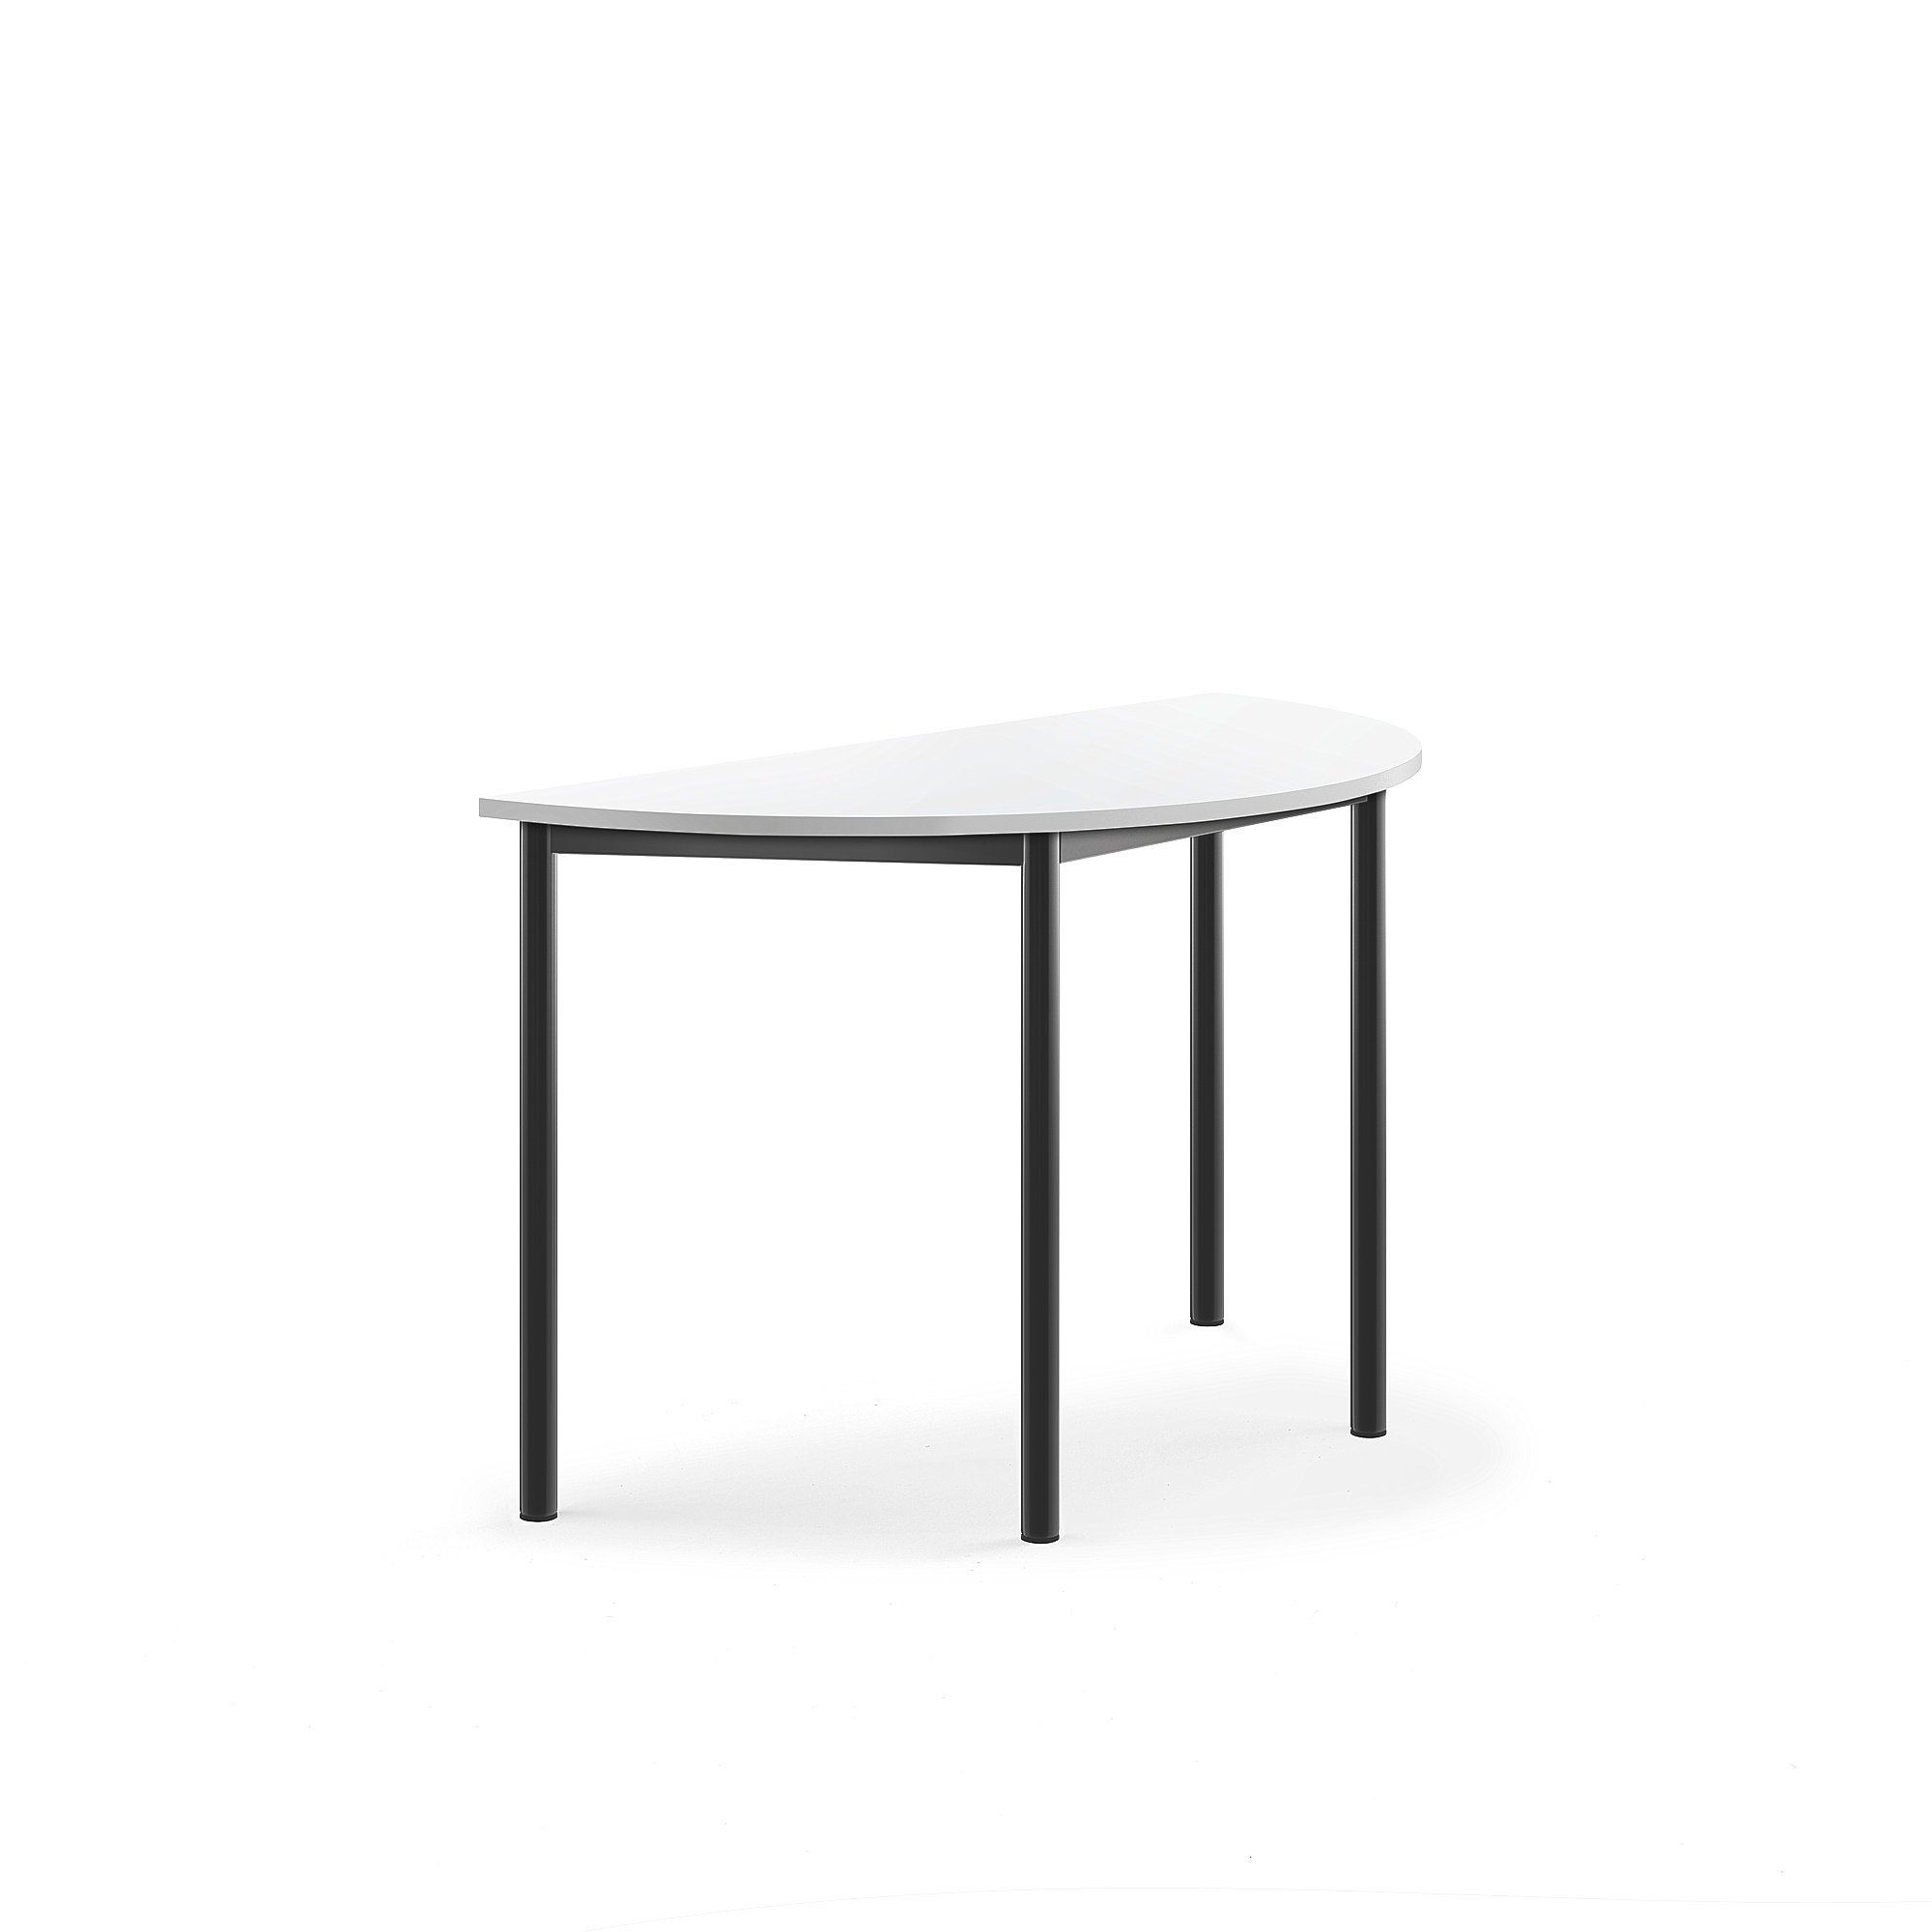 Stůl BORÅS, půlkruh, 1200x600x720 mm, antracitově šedé nohy, HPL deska, bílá